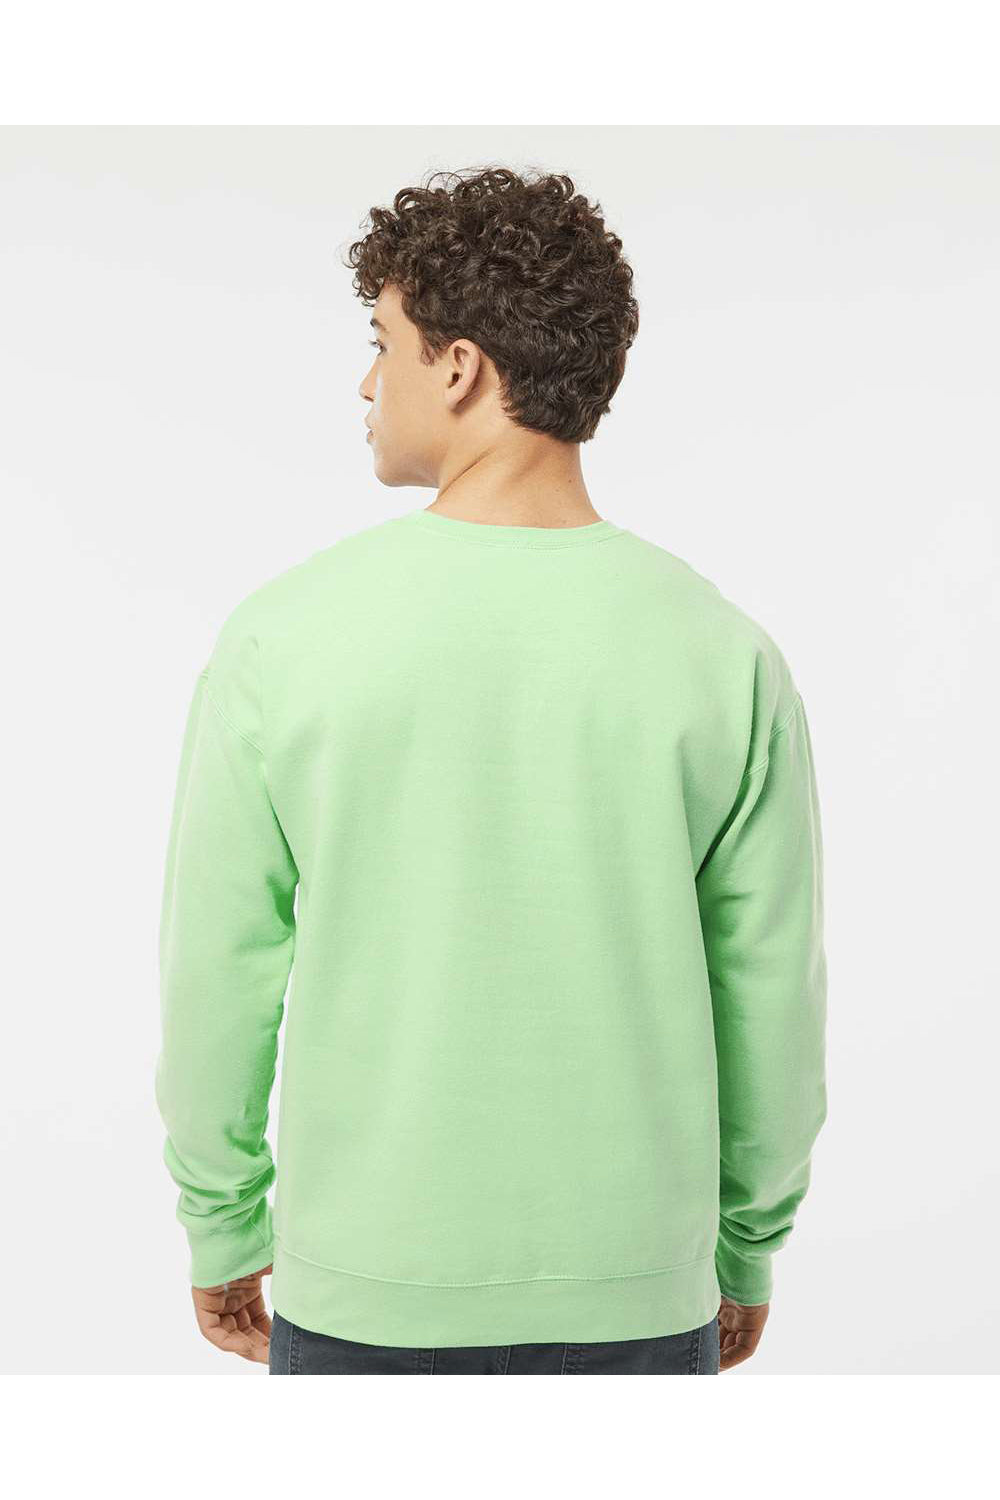 Tultex 340 Mens Fleece Crewneck Sweatshirt Neo Mint Green Model Back